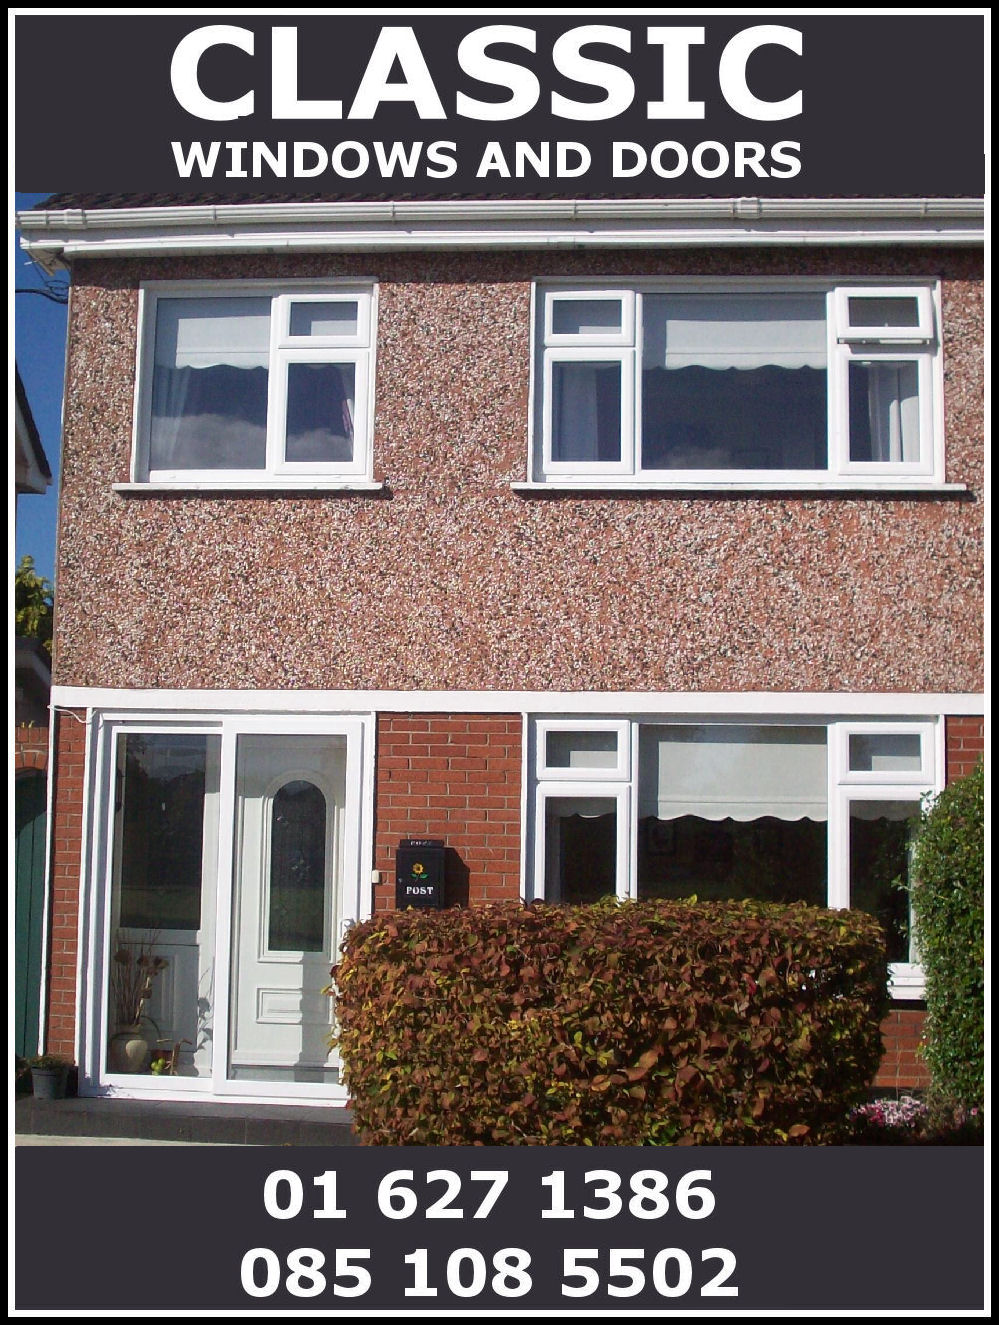 Classic Windows and Doors, Celbridge, Co. Kildare Tel :- 085 108 5502 / 01 627 5502